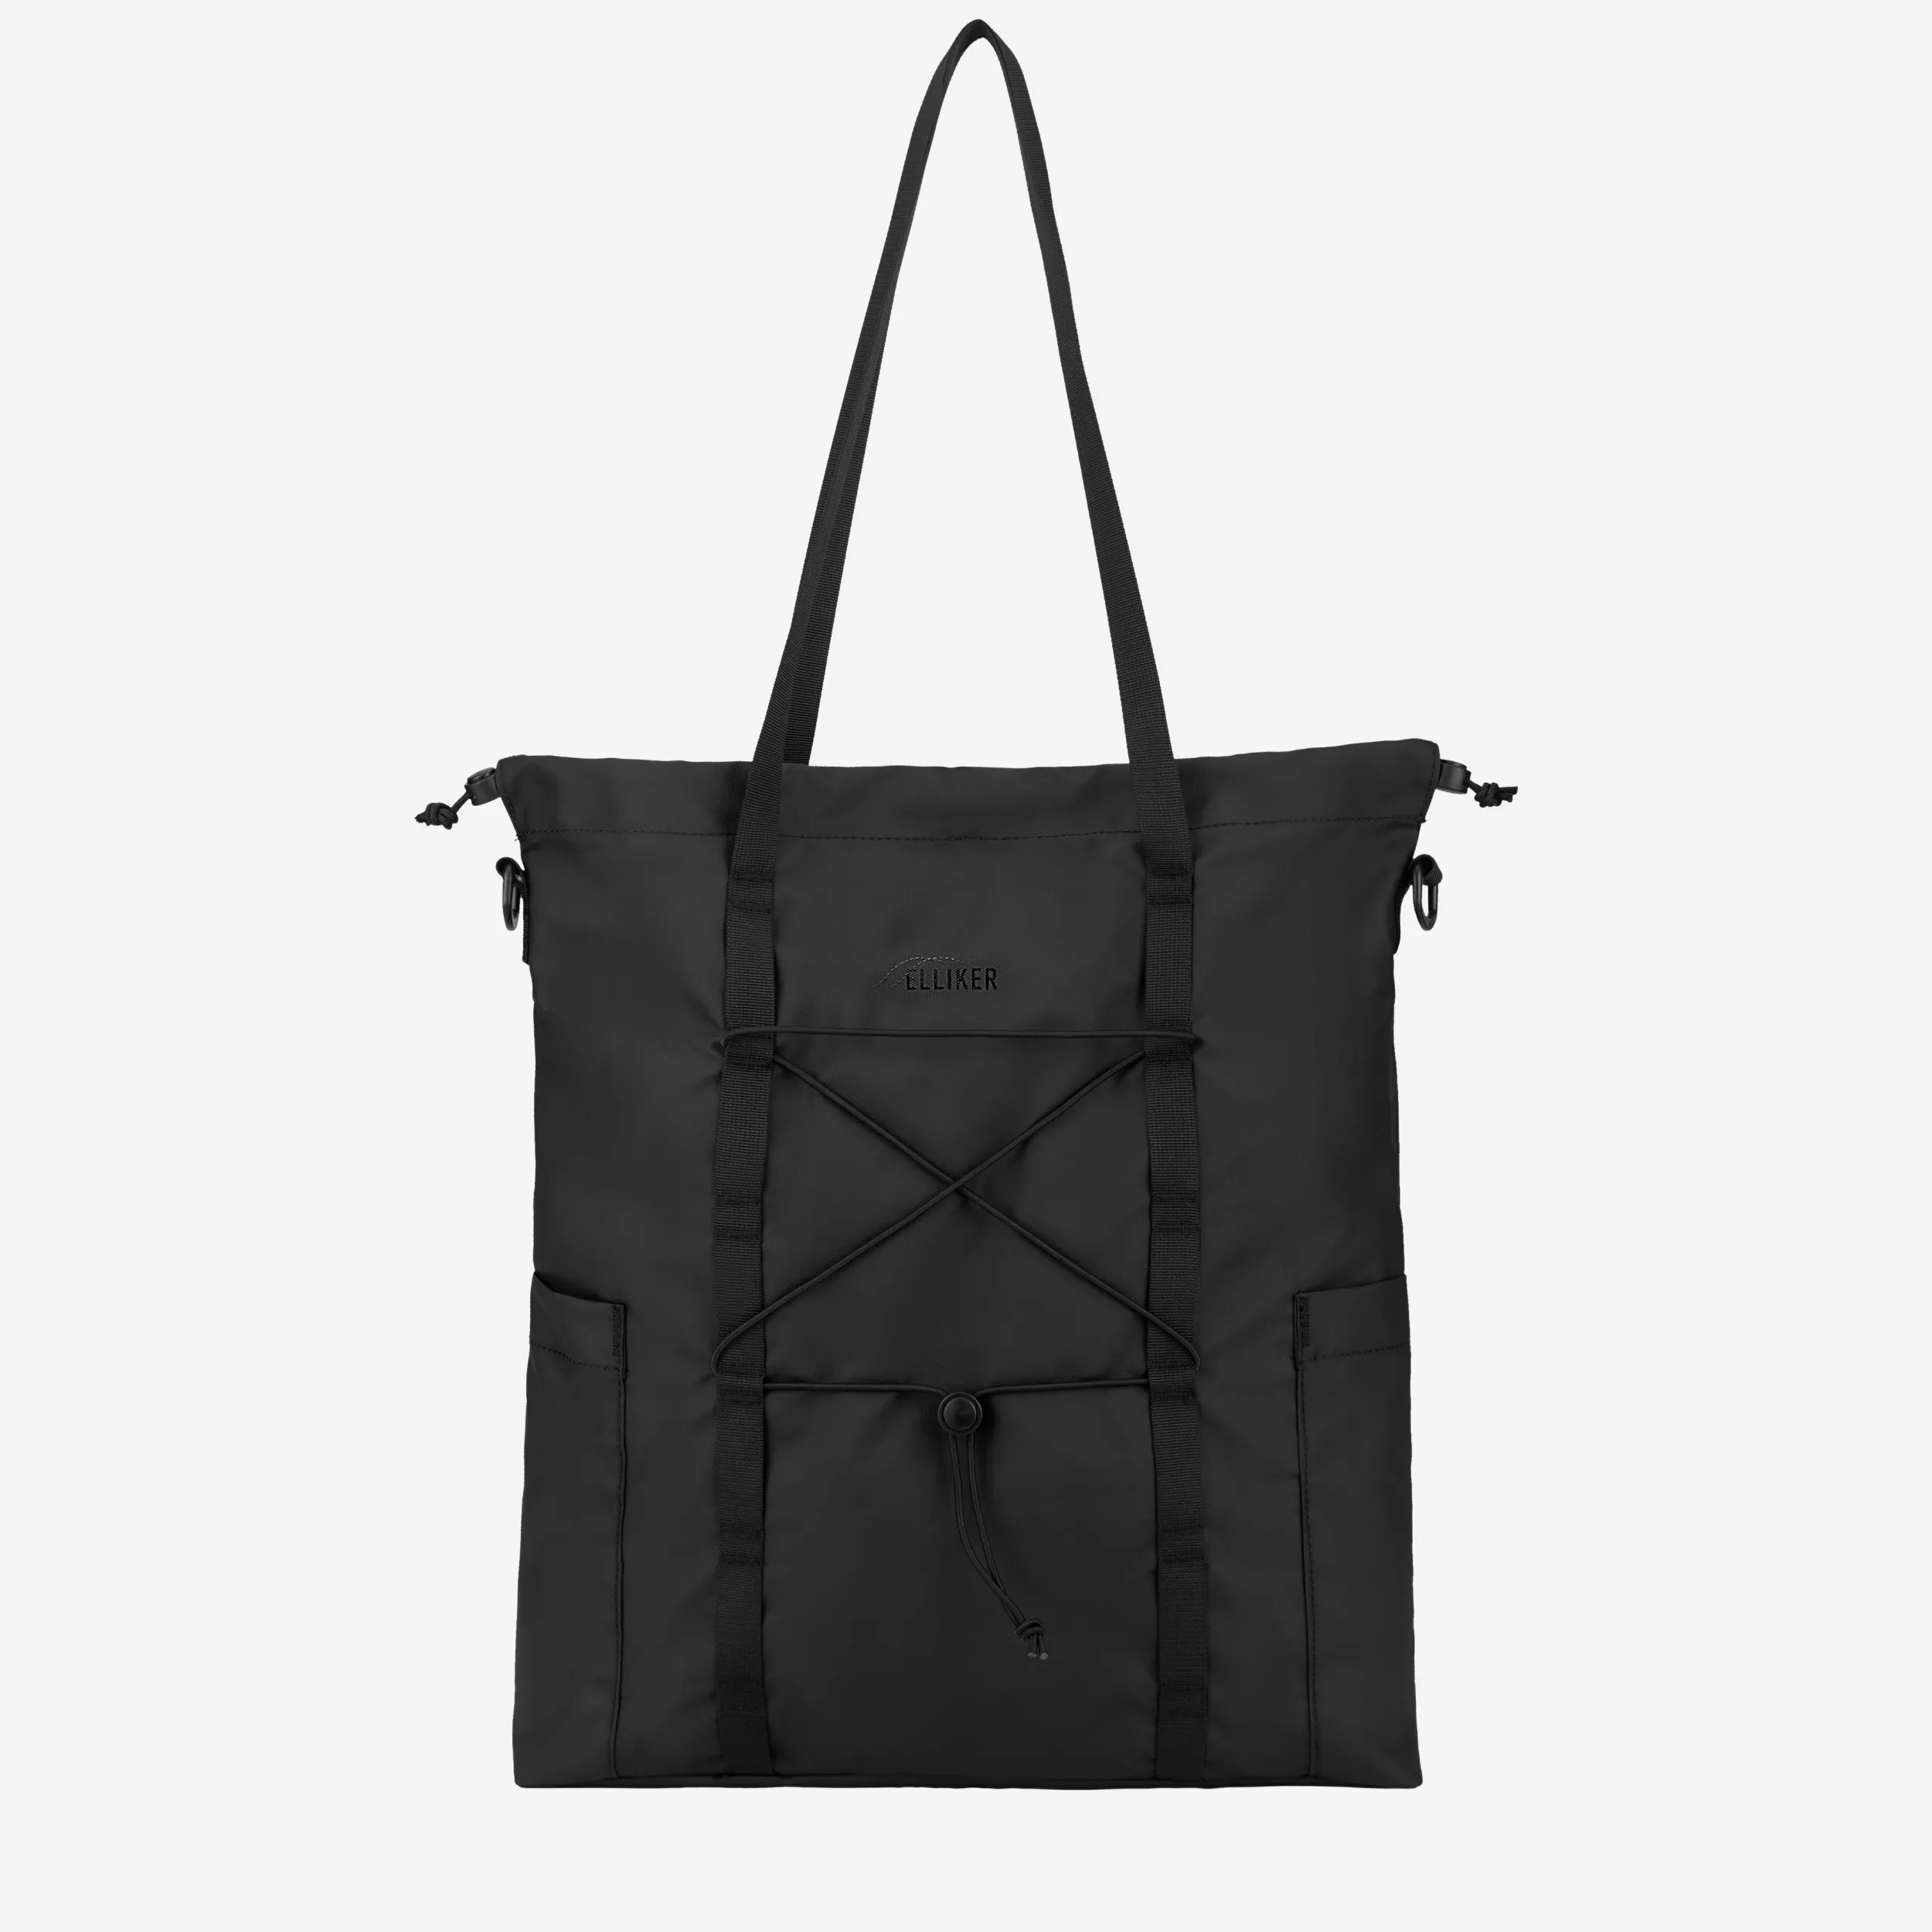 Elliker Carston Tote Bag 13L Black